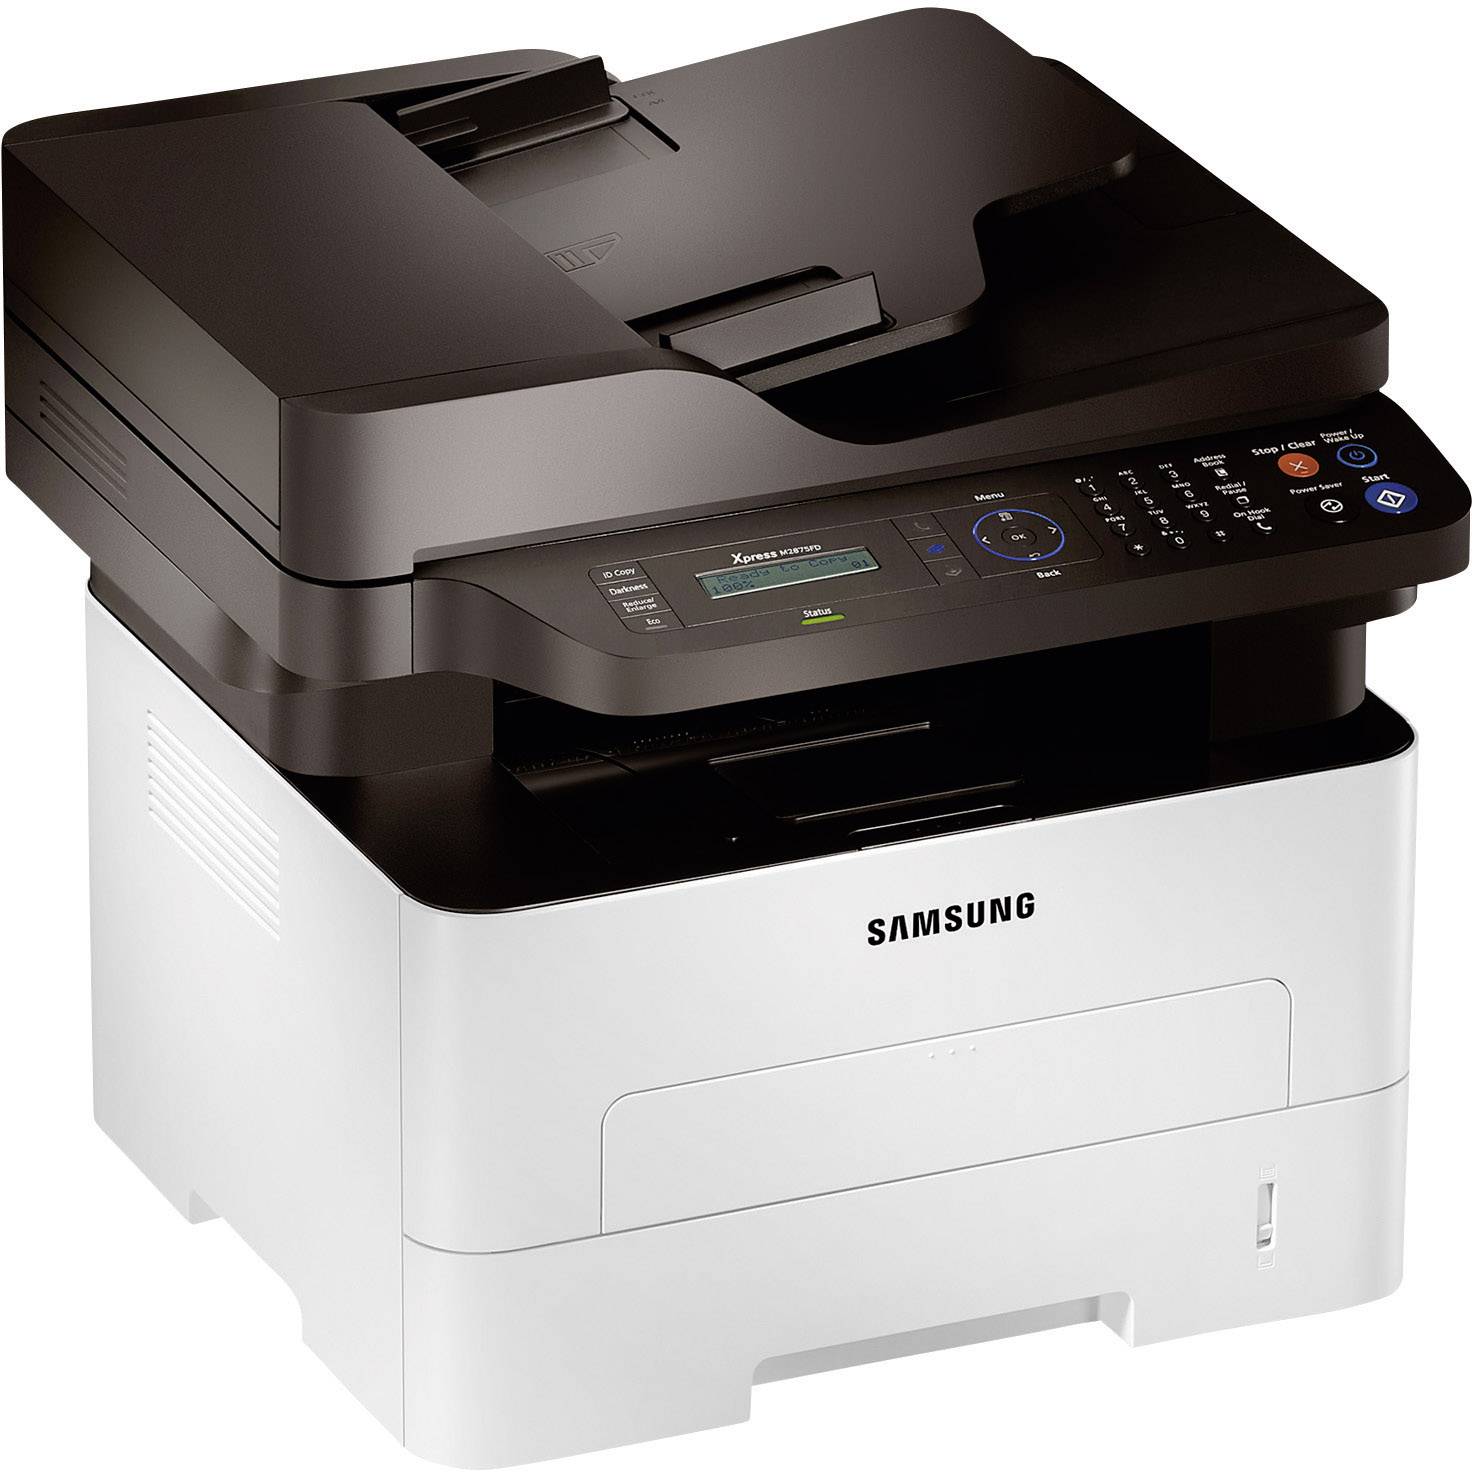 printer and photocopy